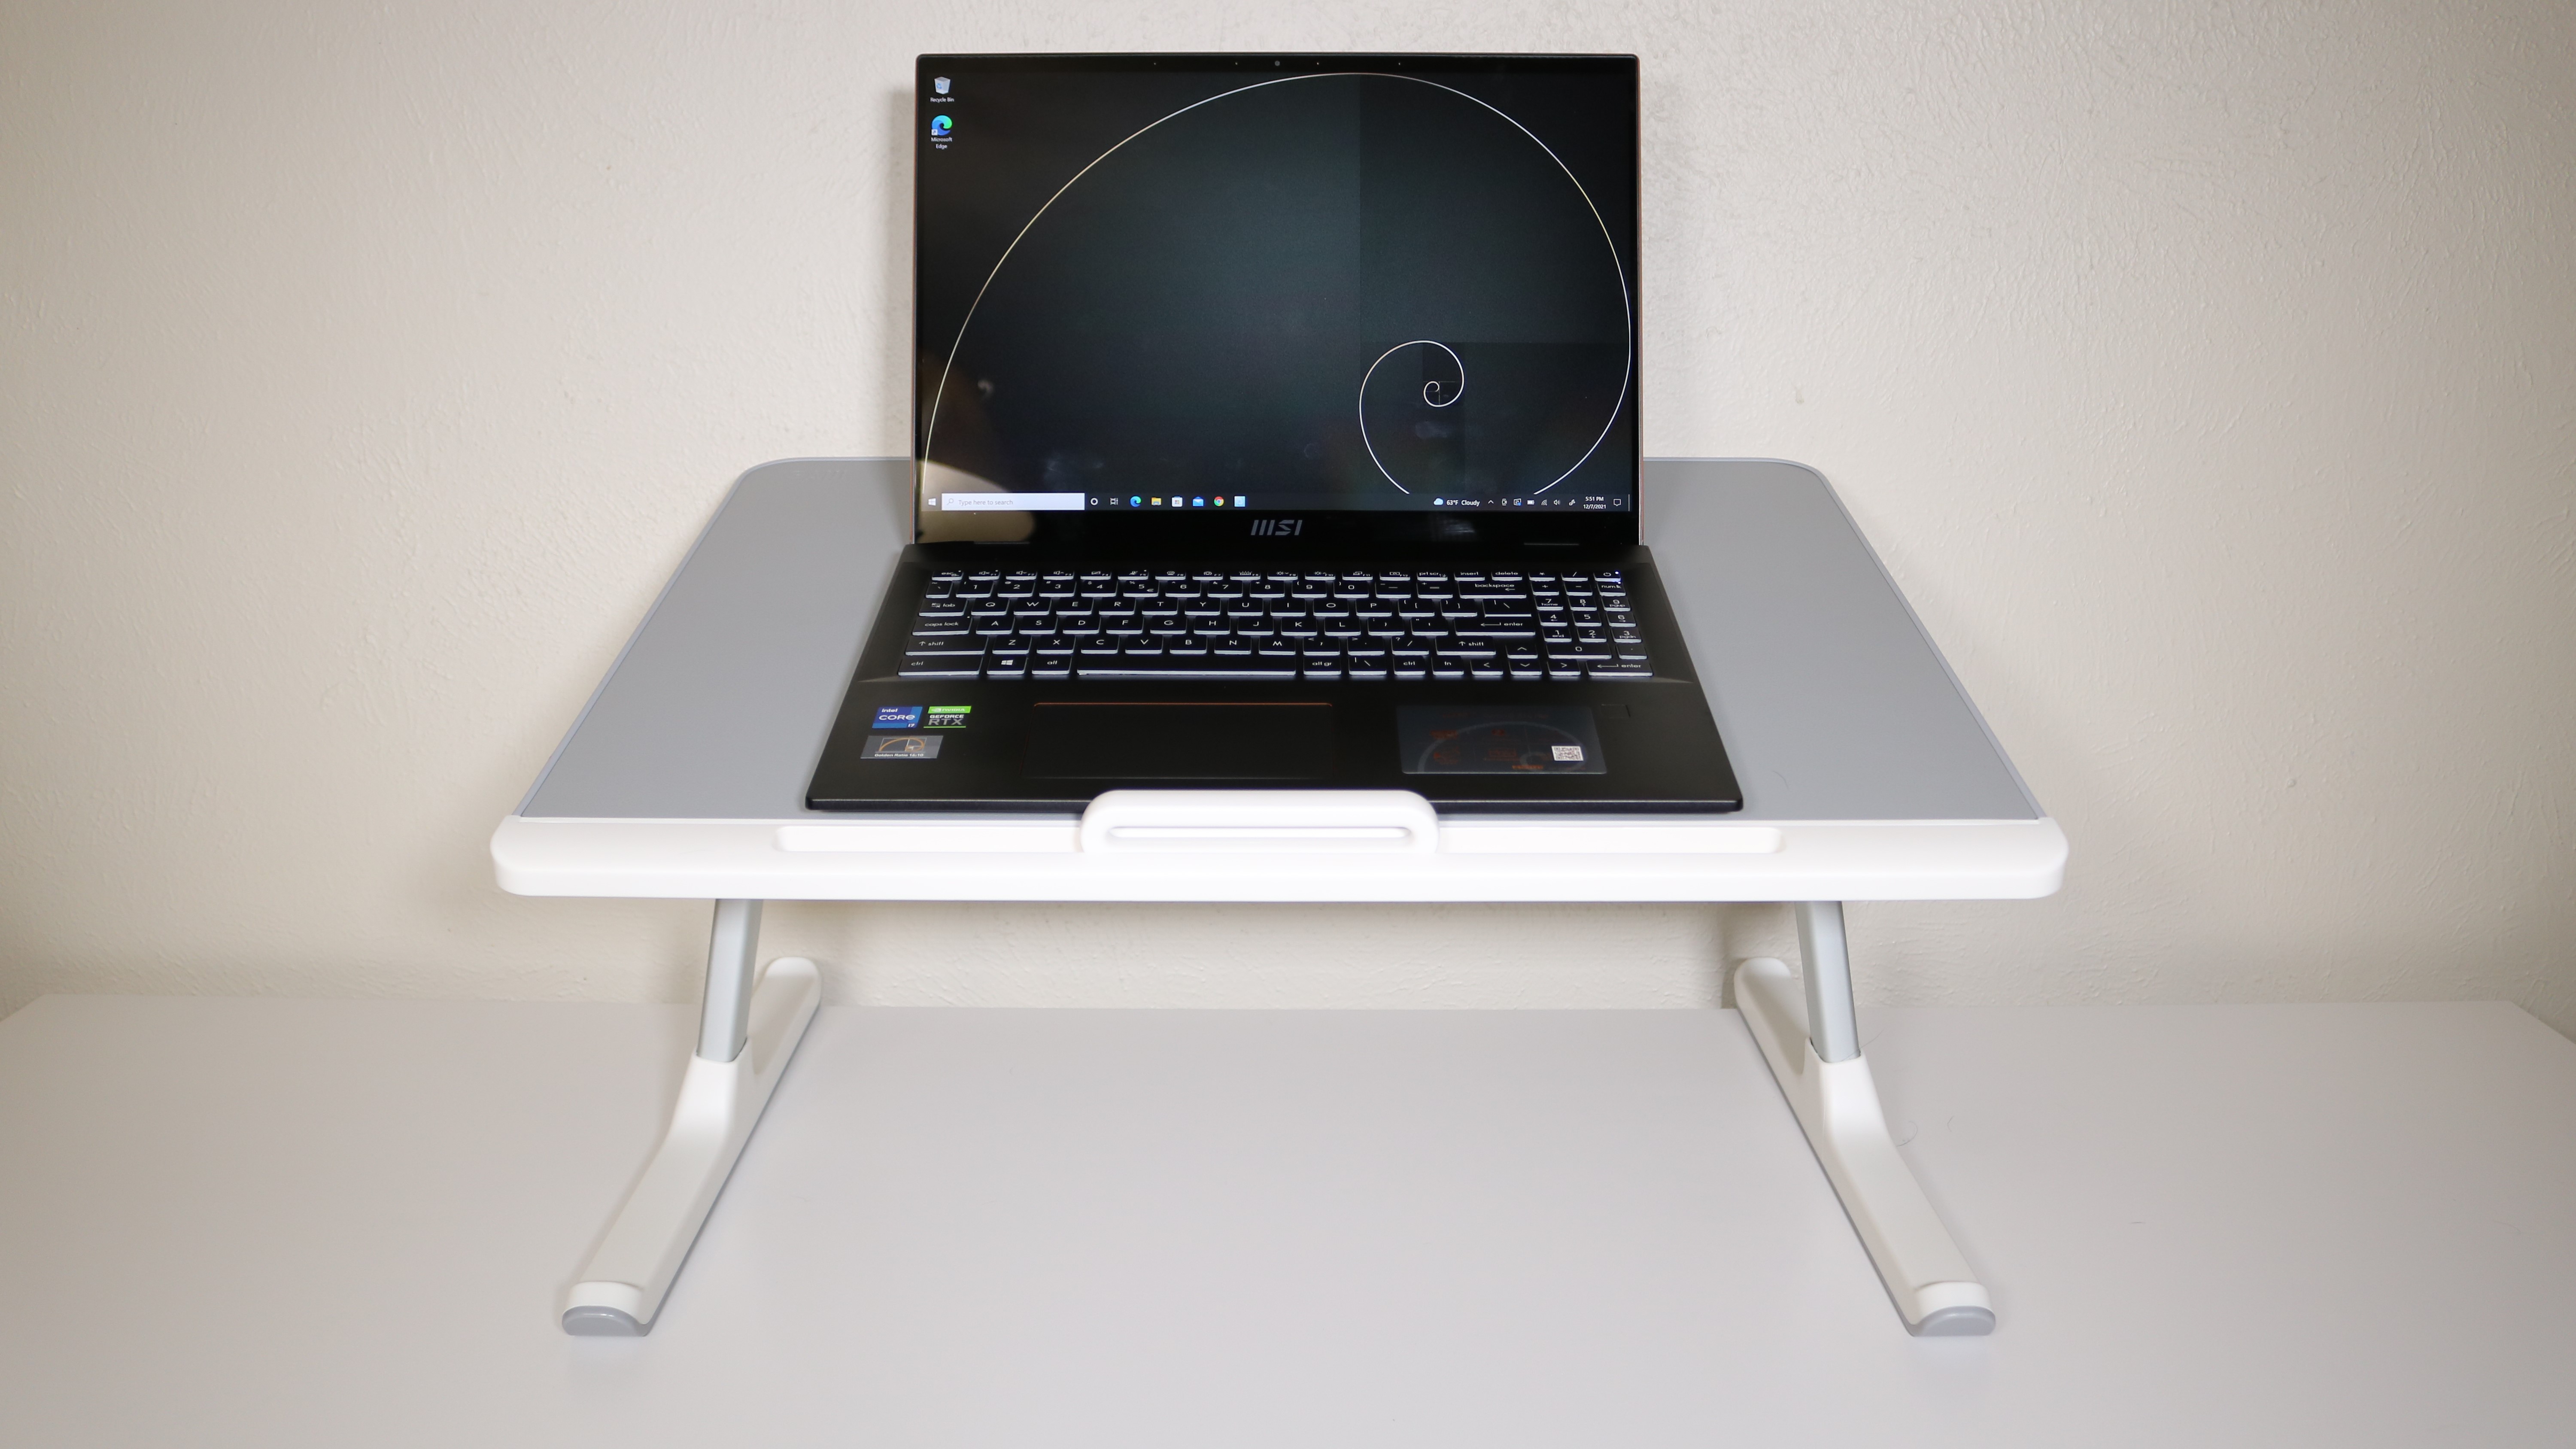 LapGear - Cup Holder Lap Desk for 15.6 Laptop - Rose Gold Marble